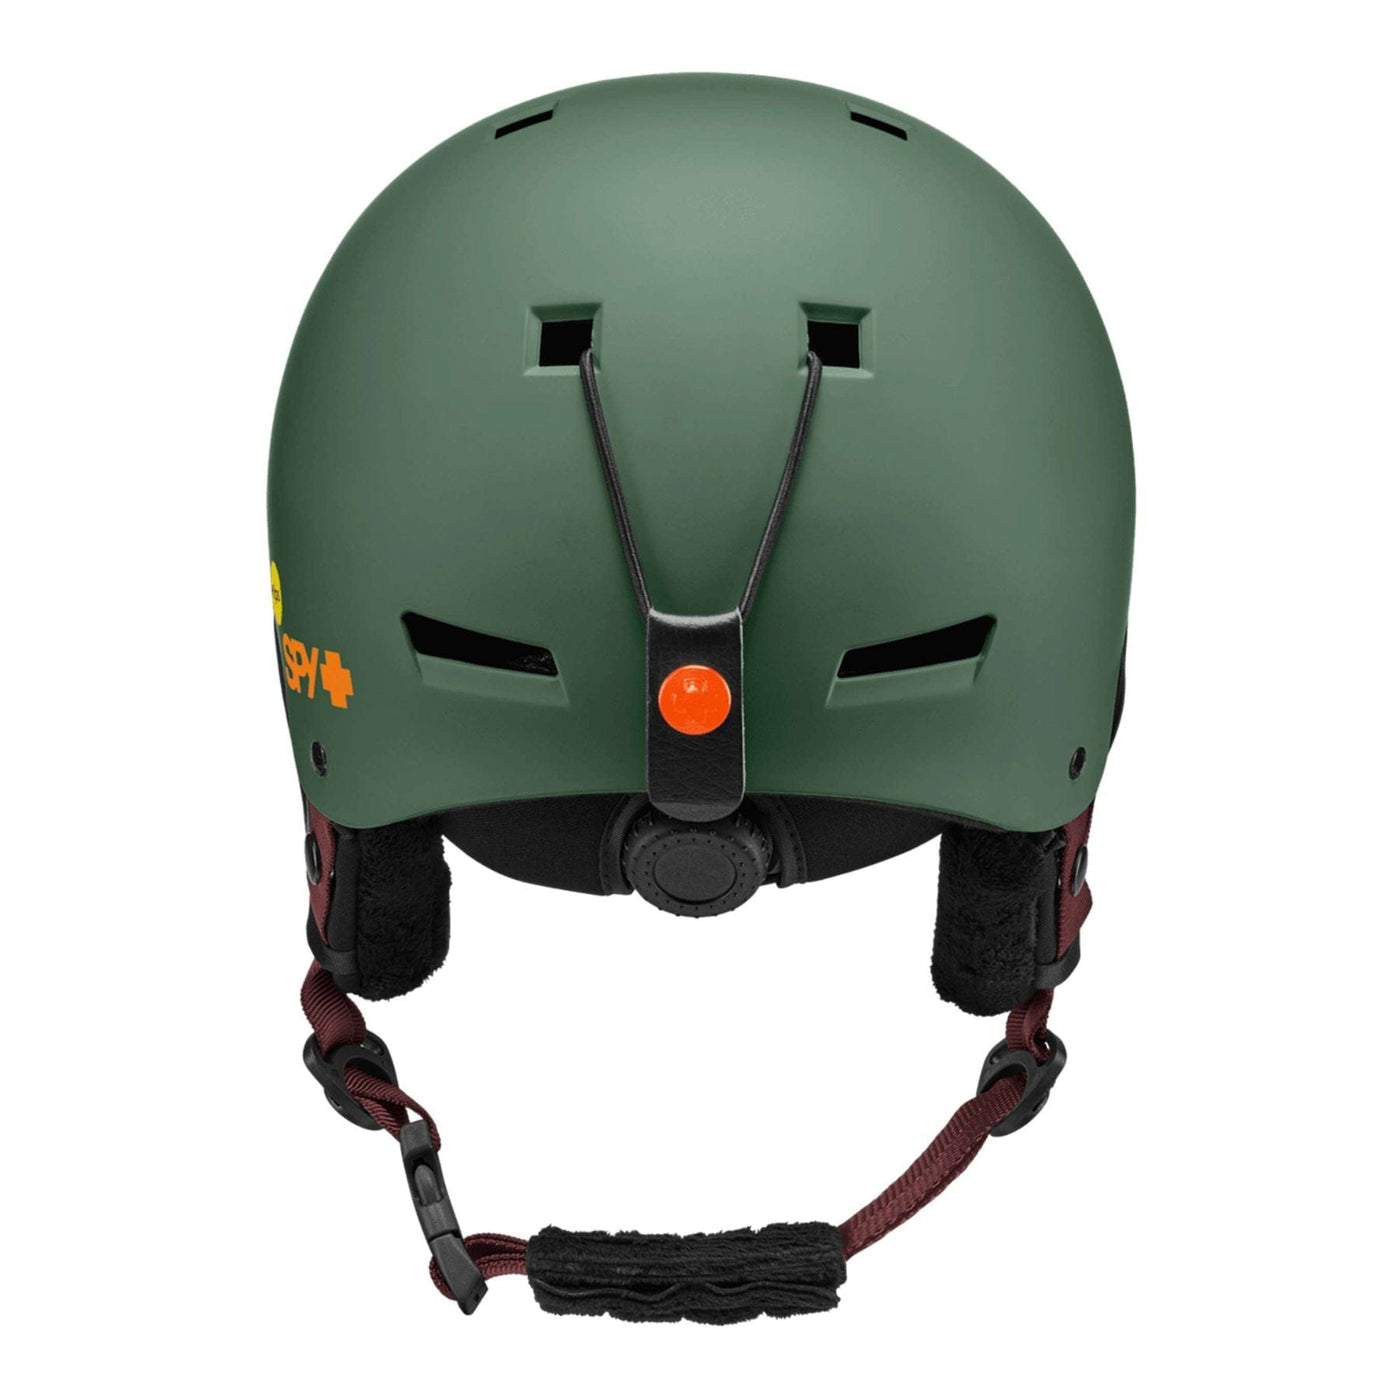 Adult Snowboard Helmet - Green